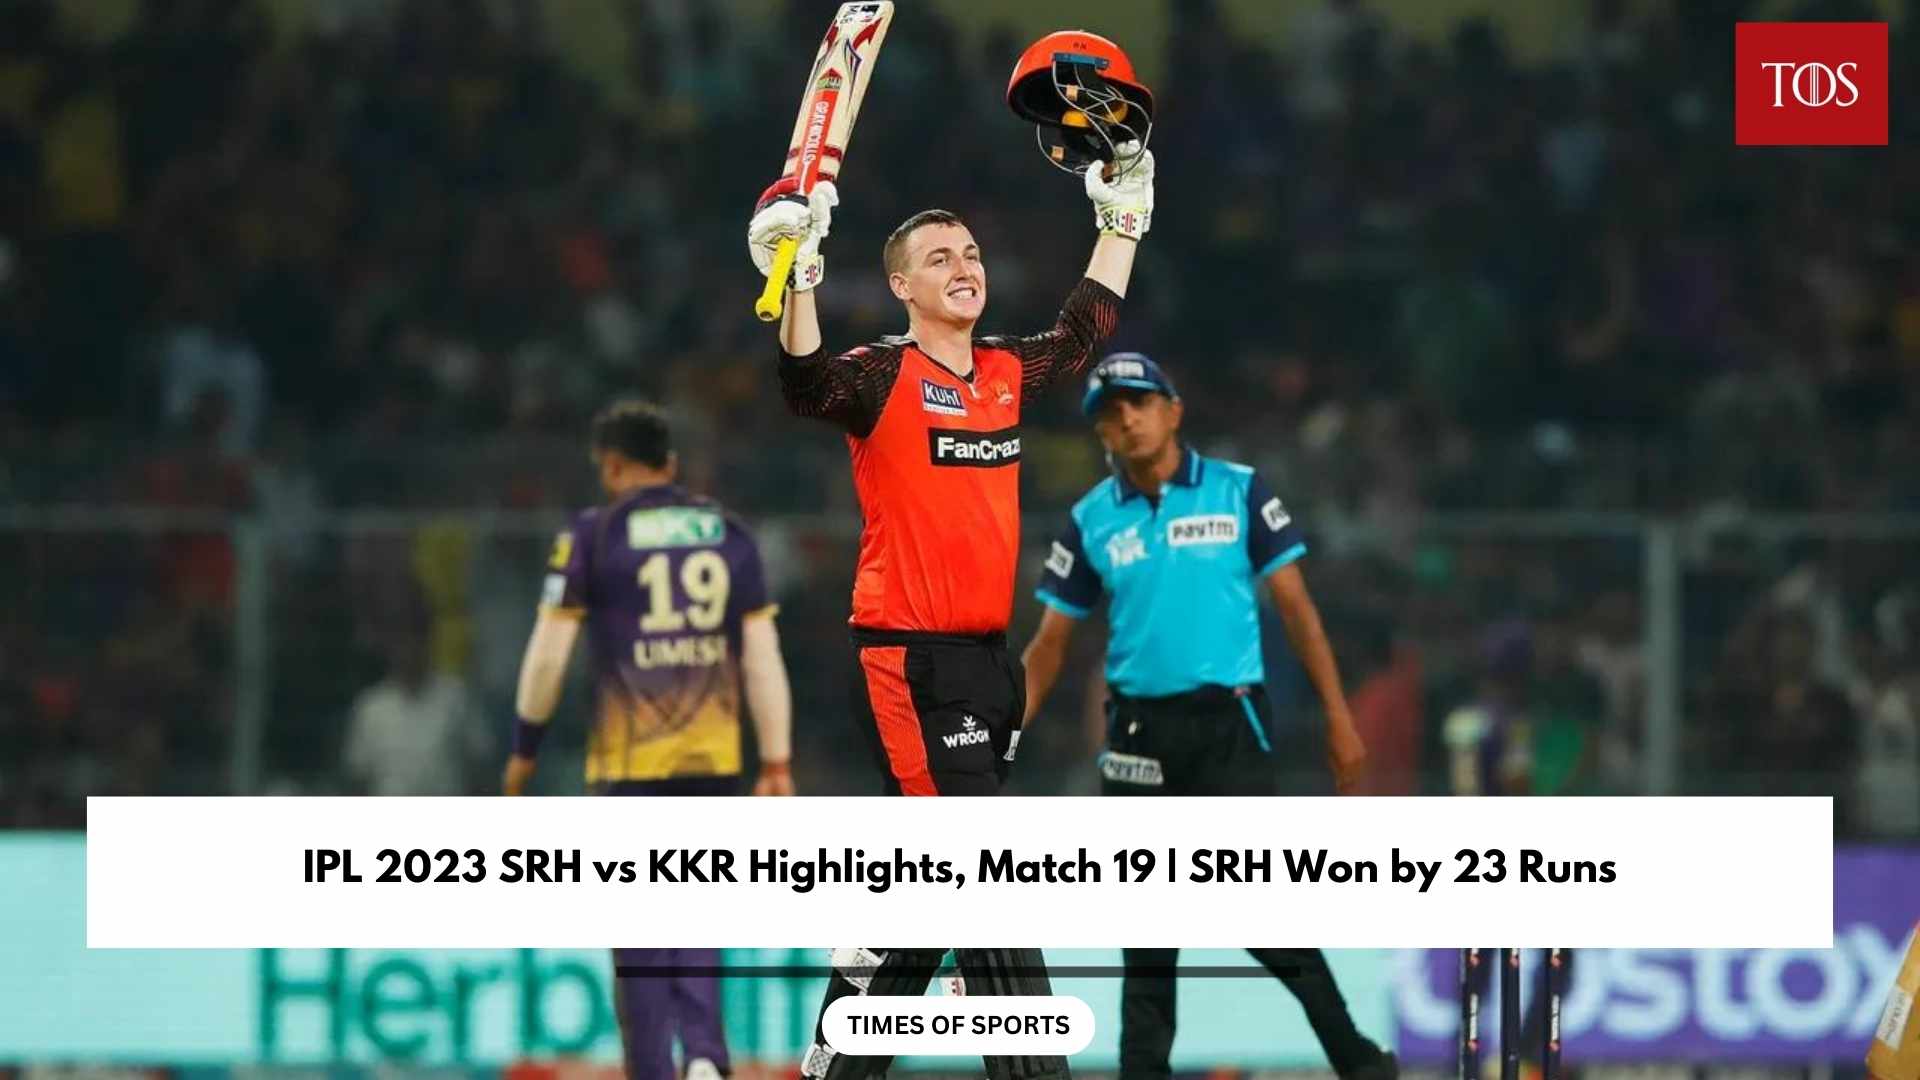 IPL 2023 SRH vs KKR Highlights, Match 19 SRH Won by 23 Runs